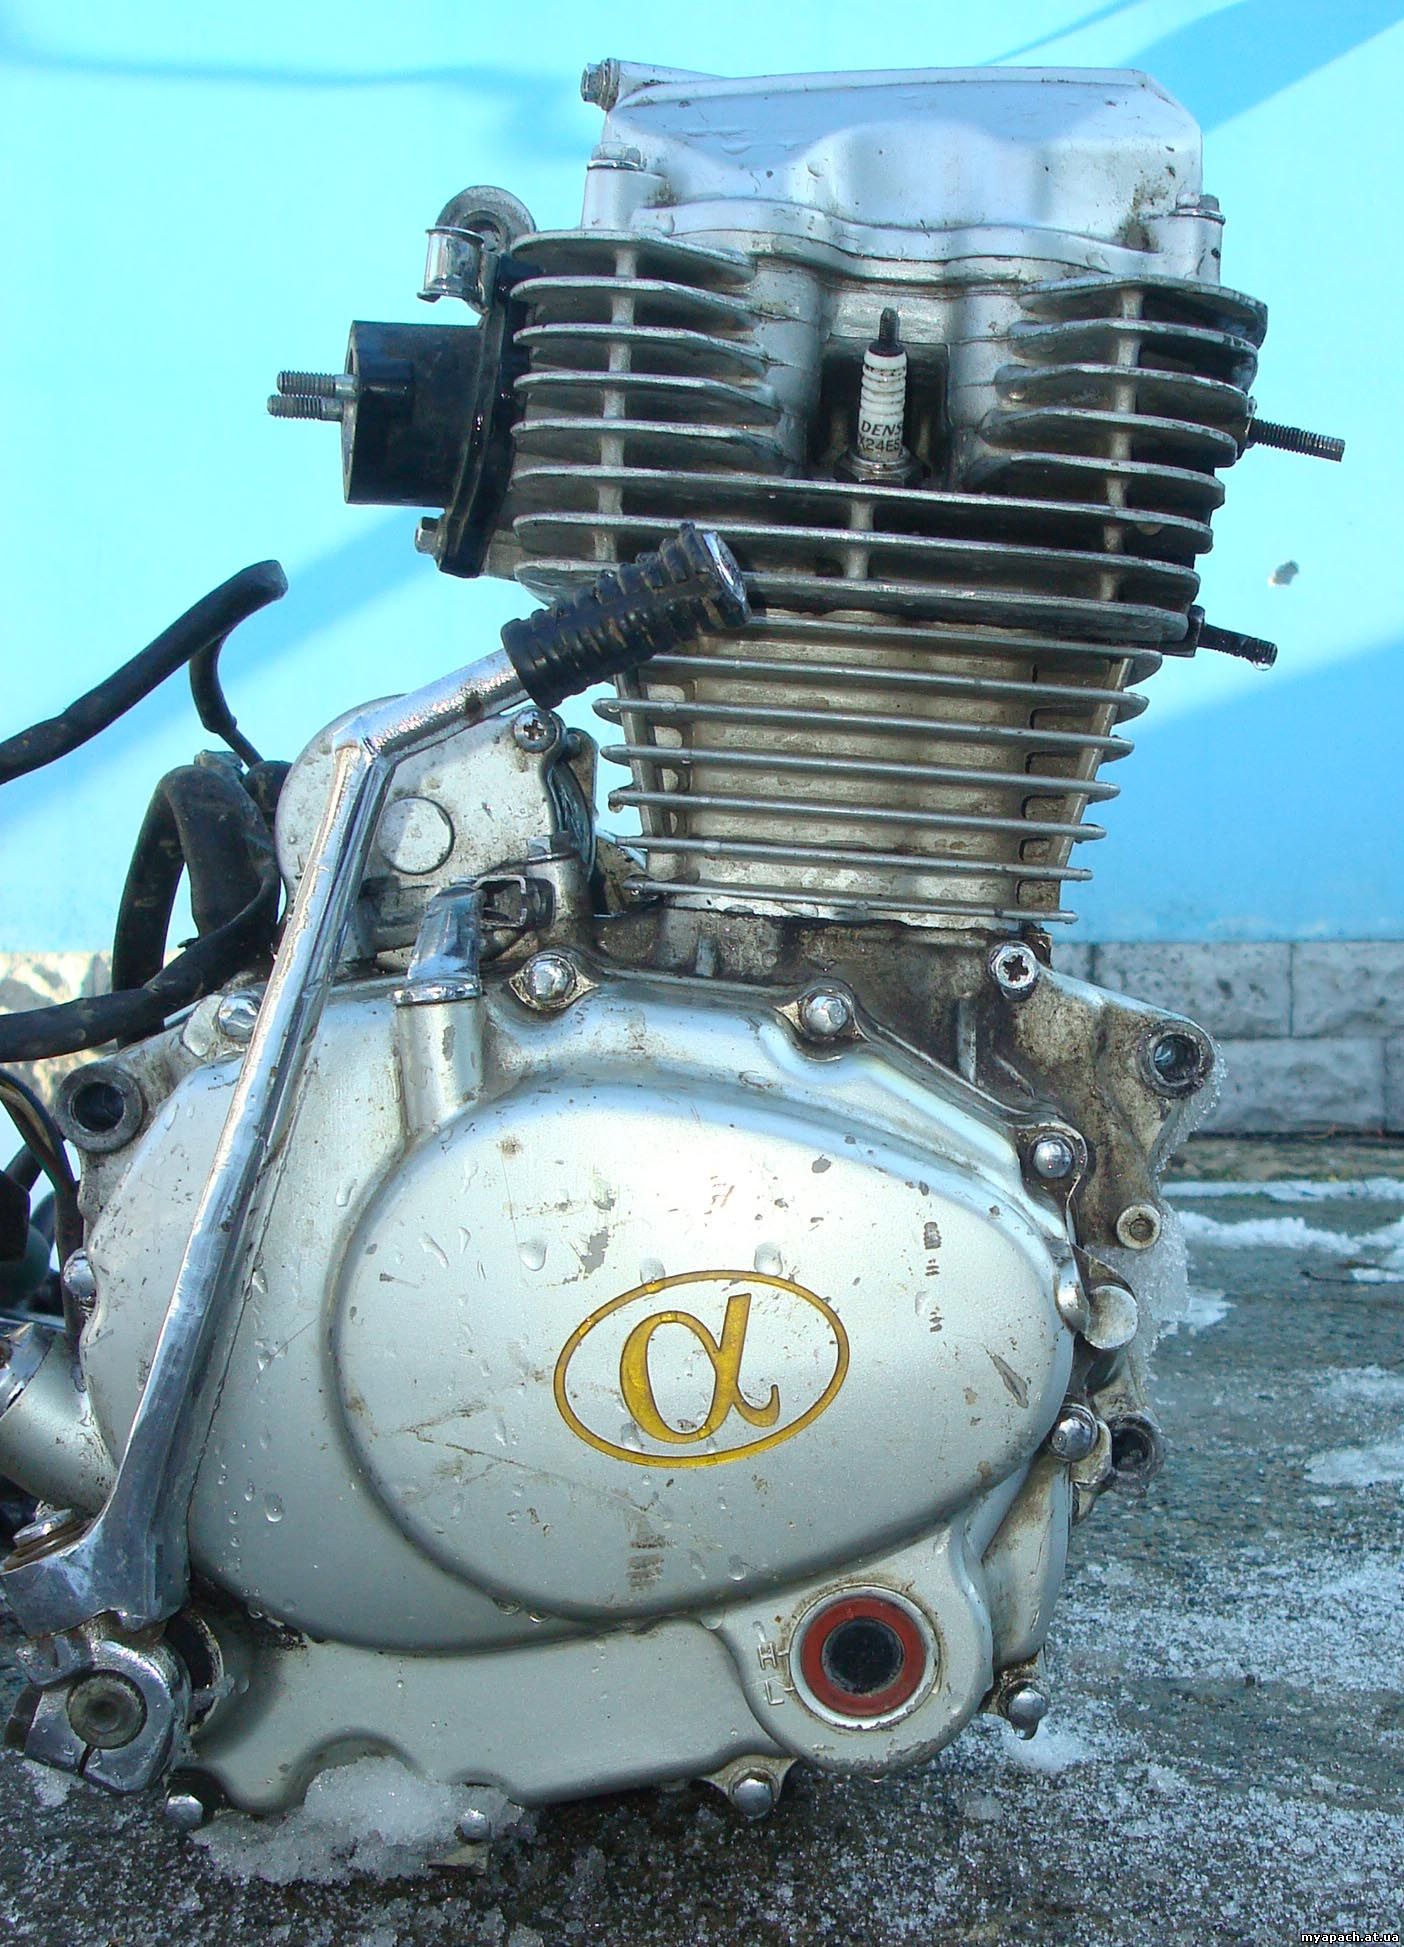 150 cc CG 162 FMJ engine